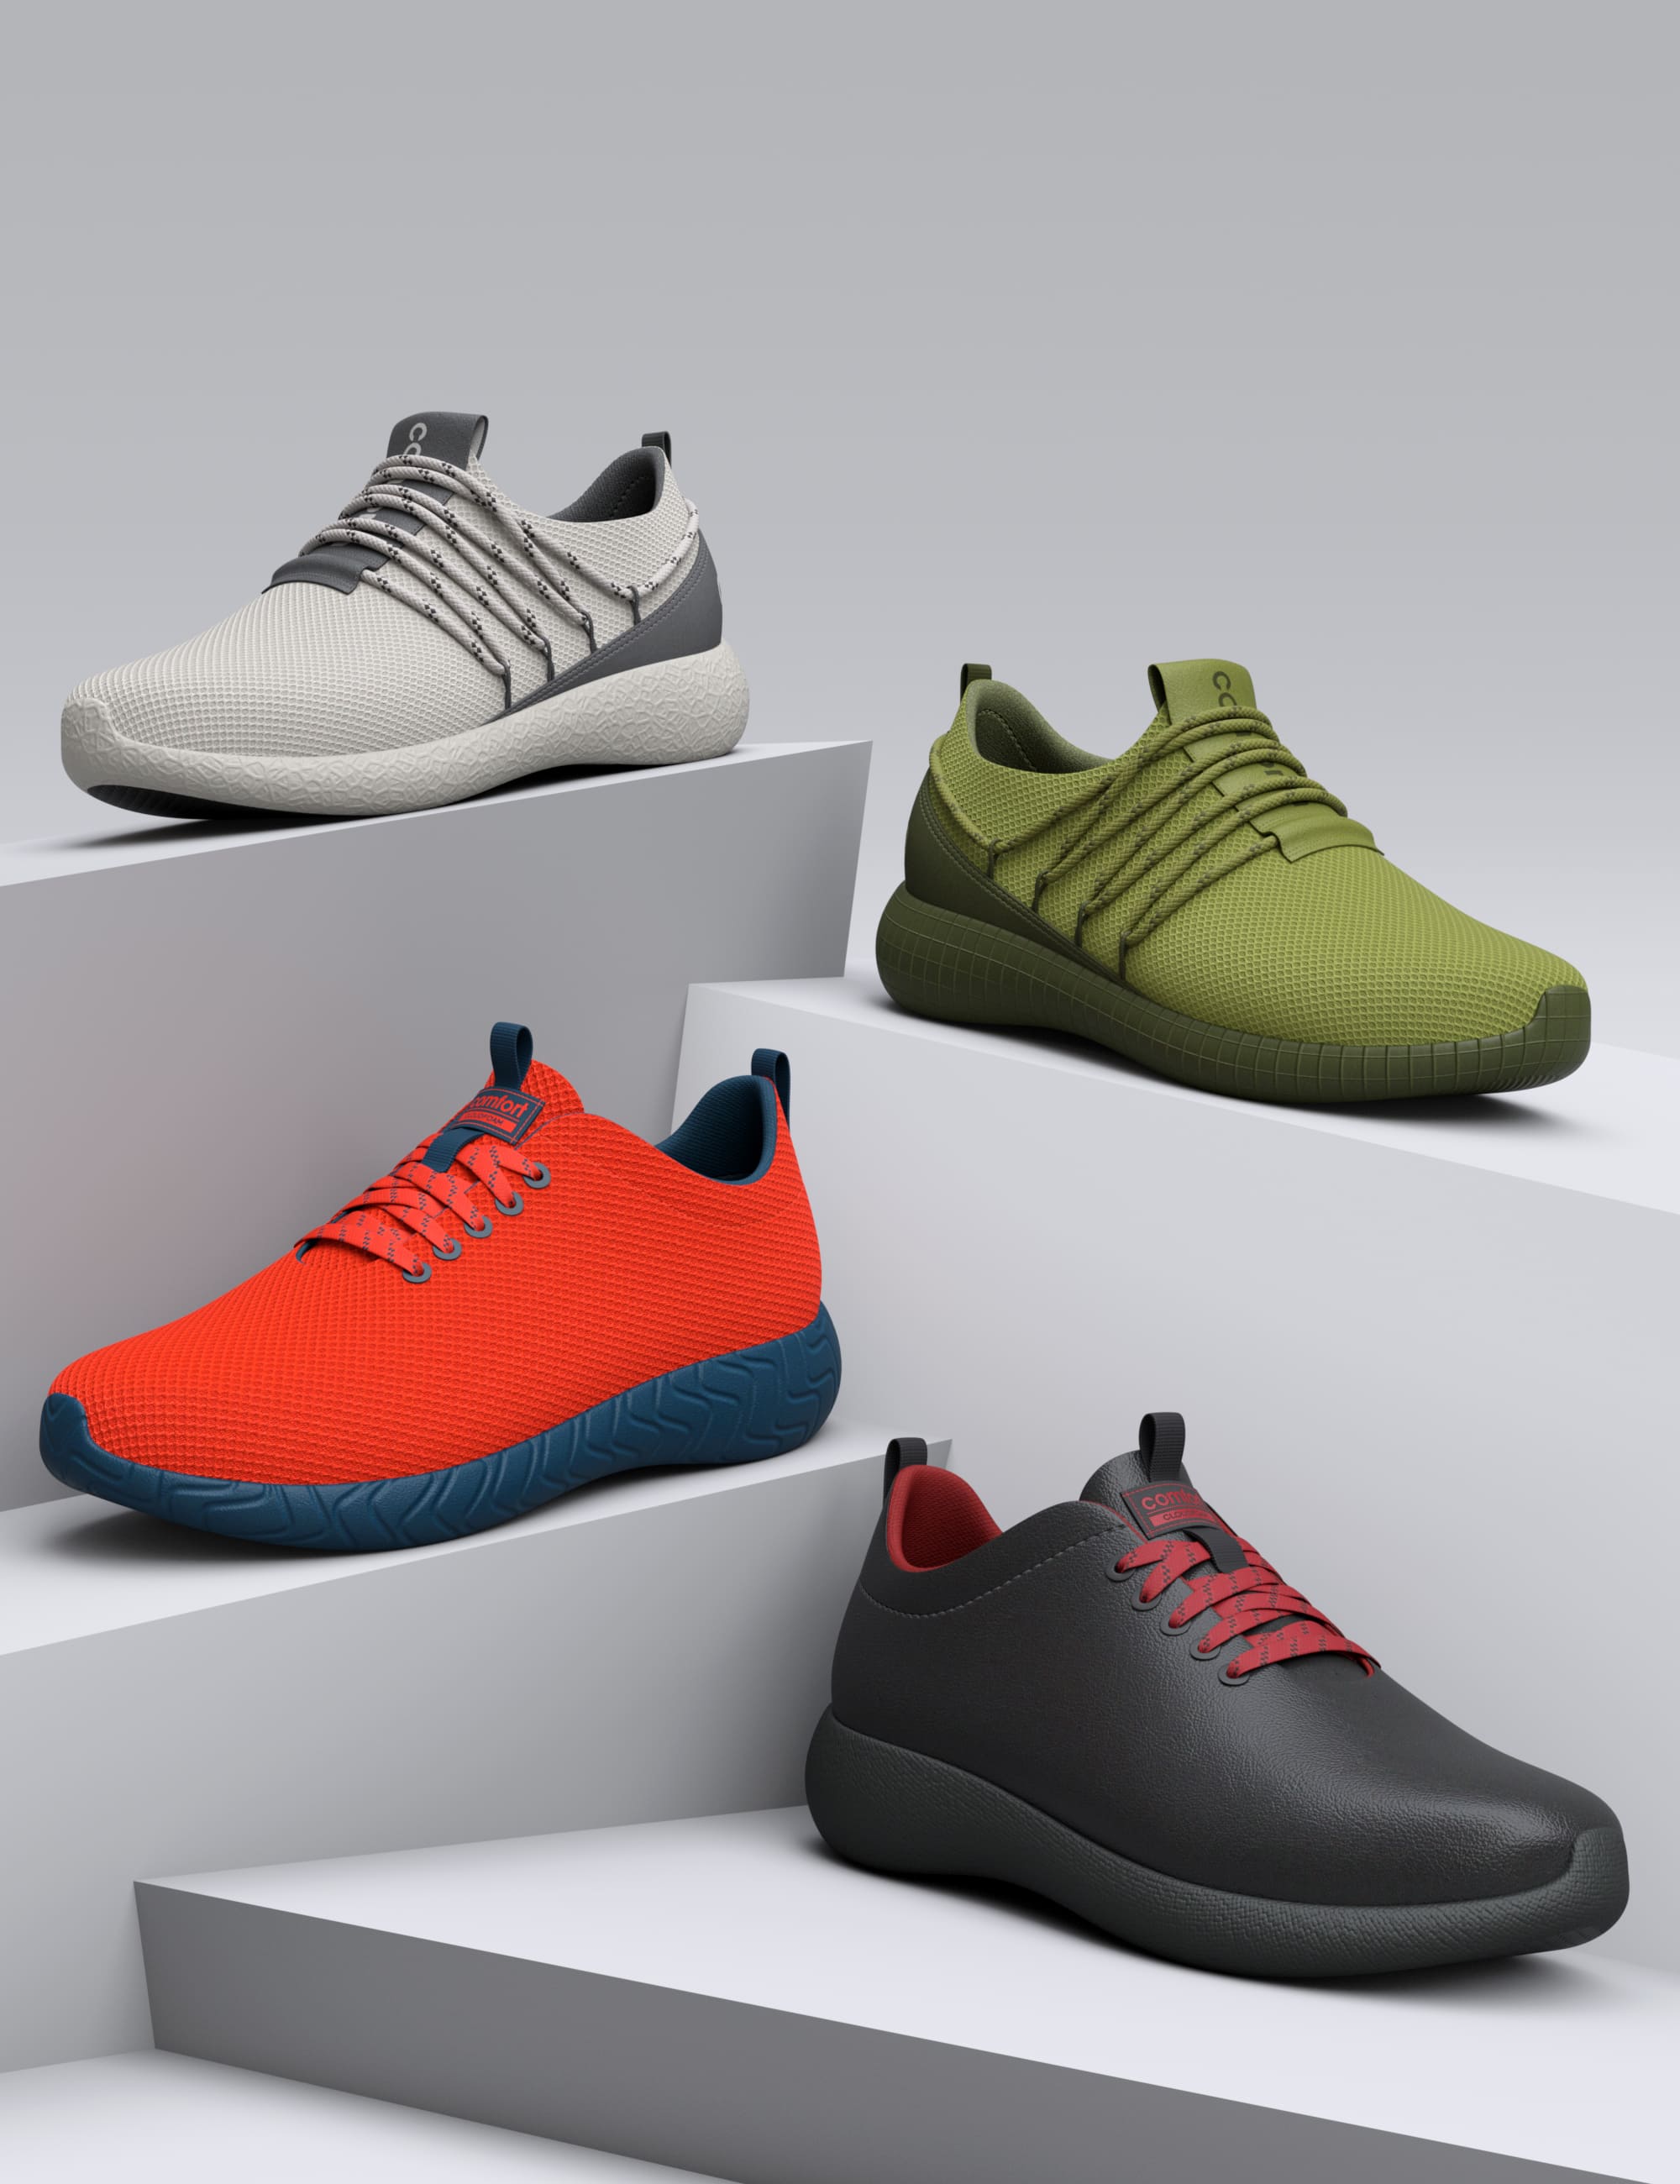 HL Sneakers for Genesis 9_DAZ3D下载站